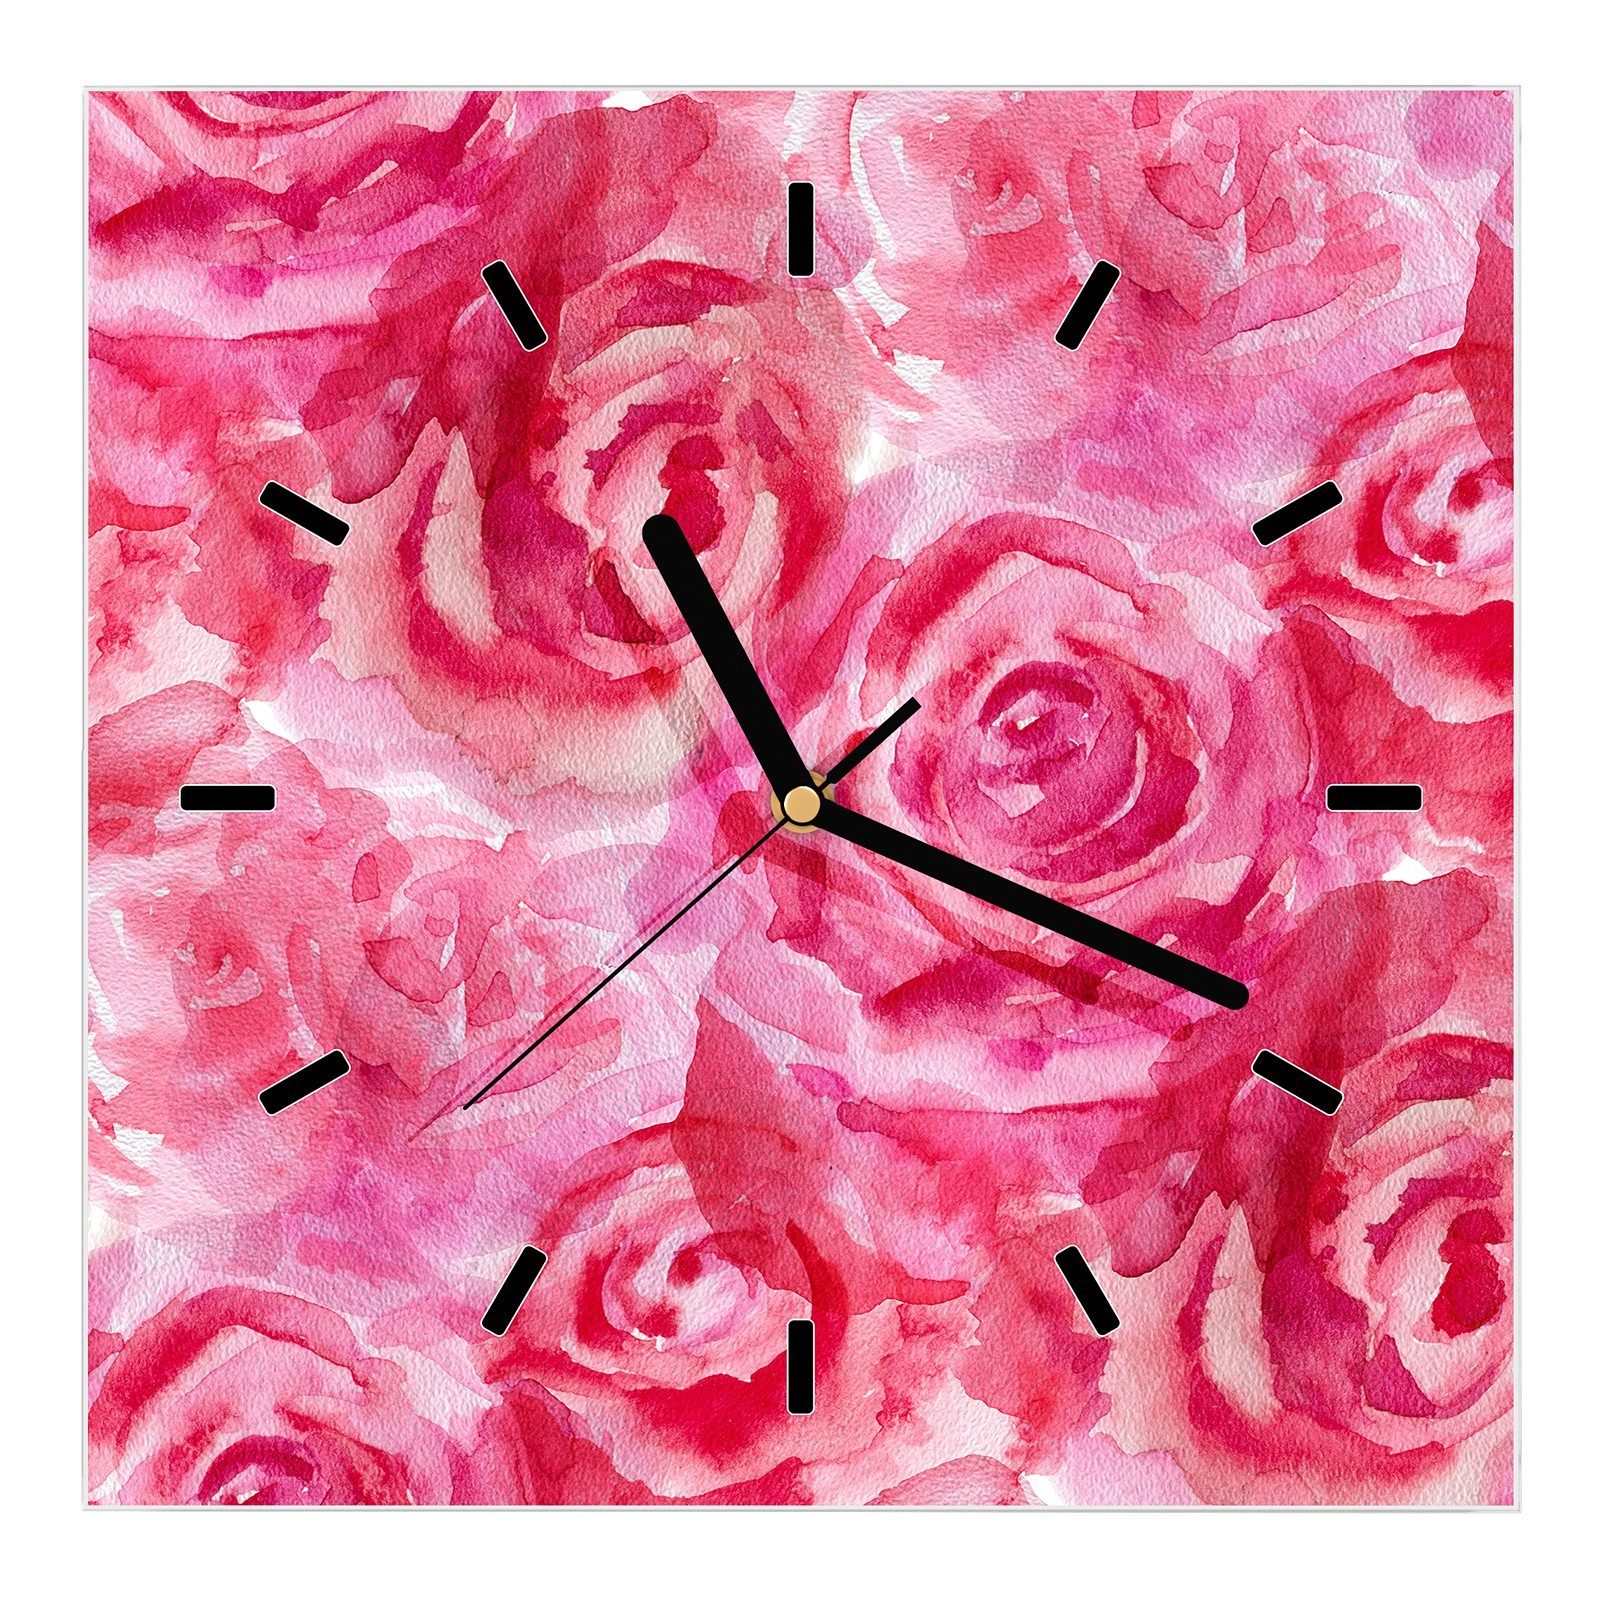 Primedeco Wanduhr Glasuhr Wanduhr Wandkunst Größe 30 x 30 cm mit Motiv Pinke Rosenblüten | Wanduhren